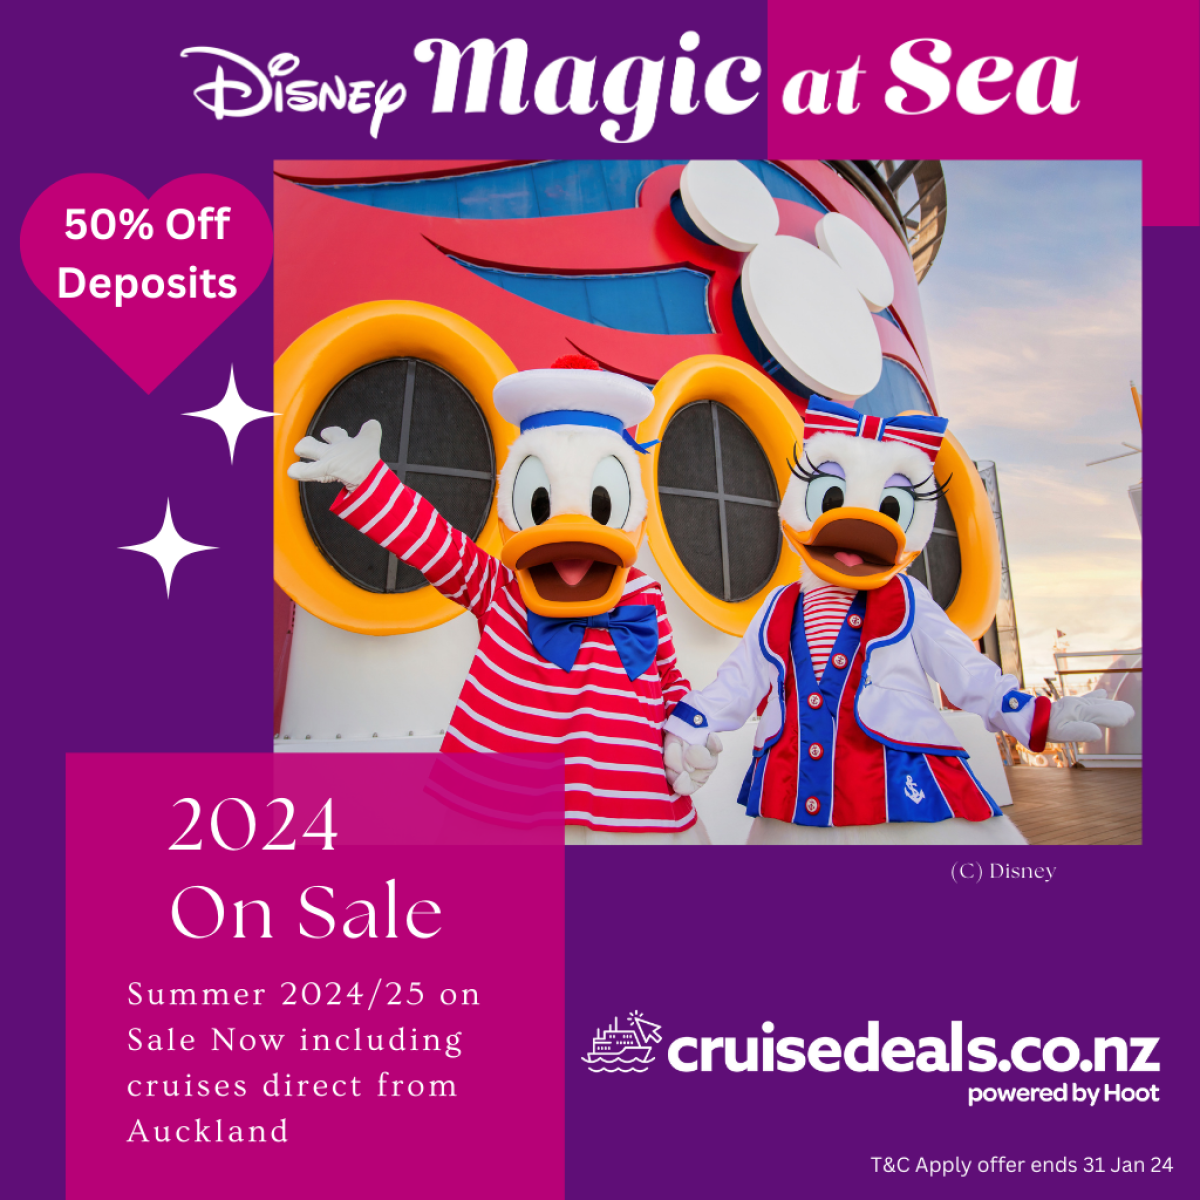 50% Off Disney Cruise Deposits